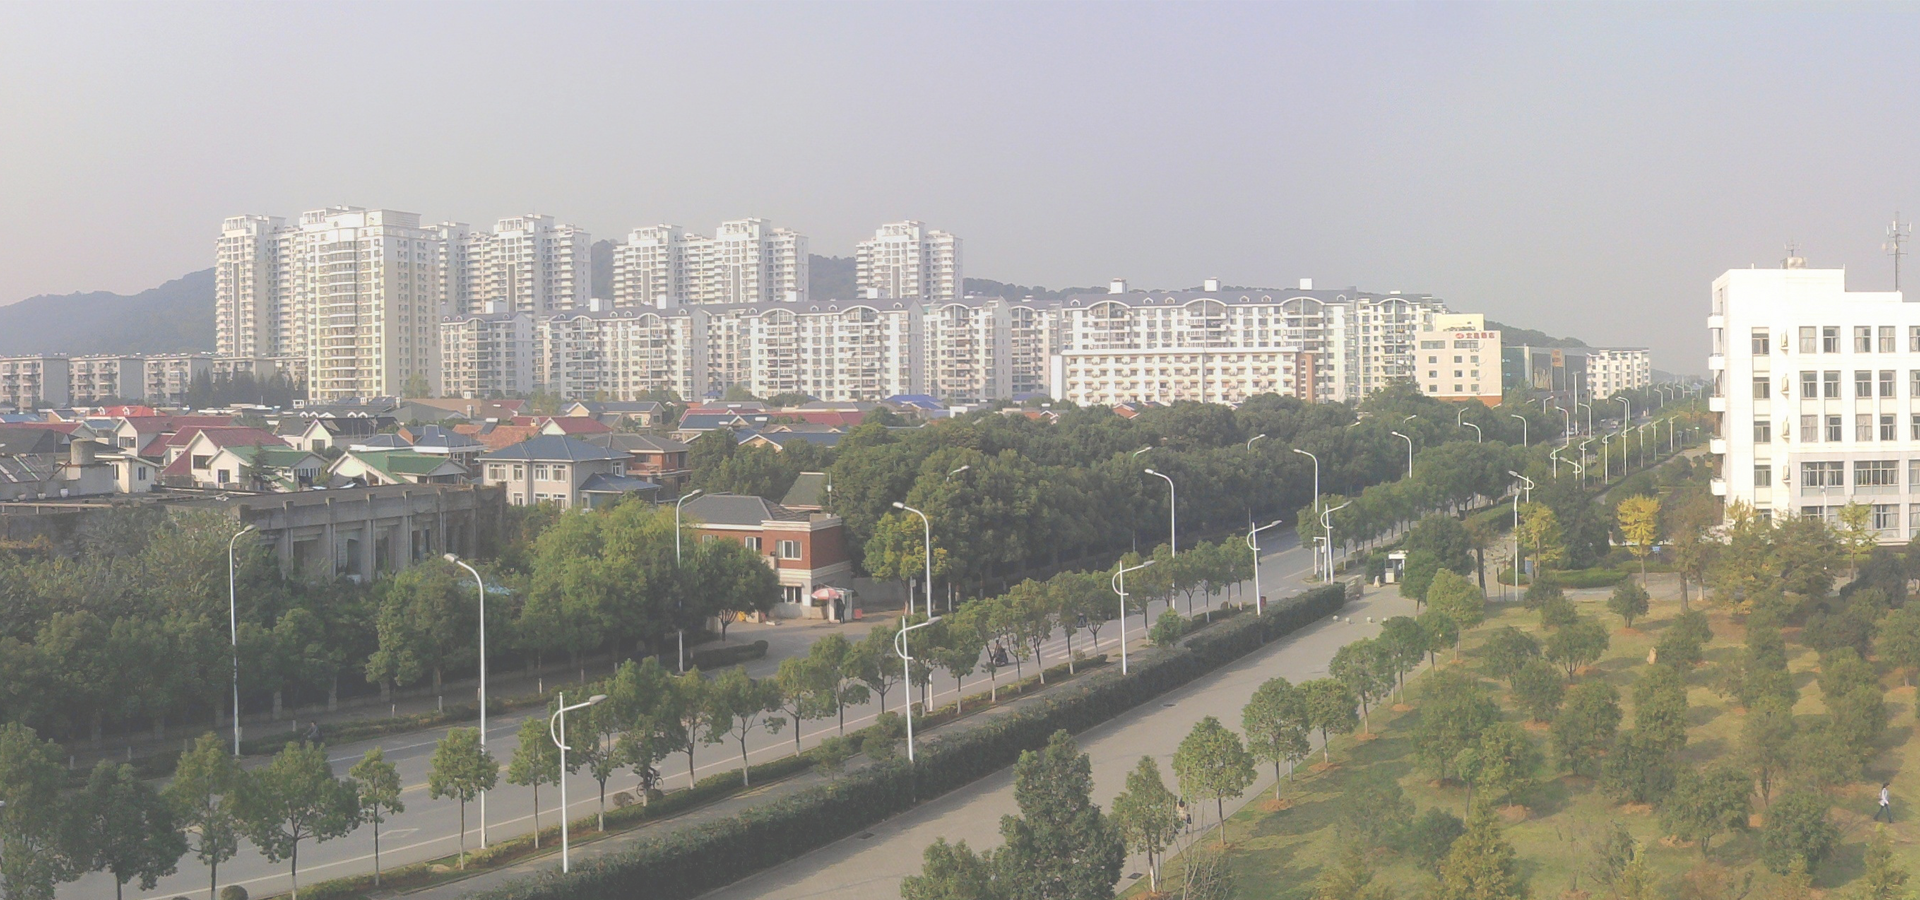 <b>Hongshan, Hubei Province, China</b>